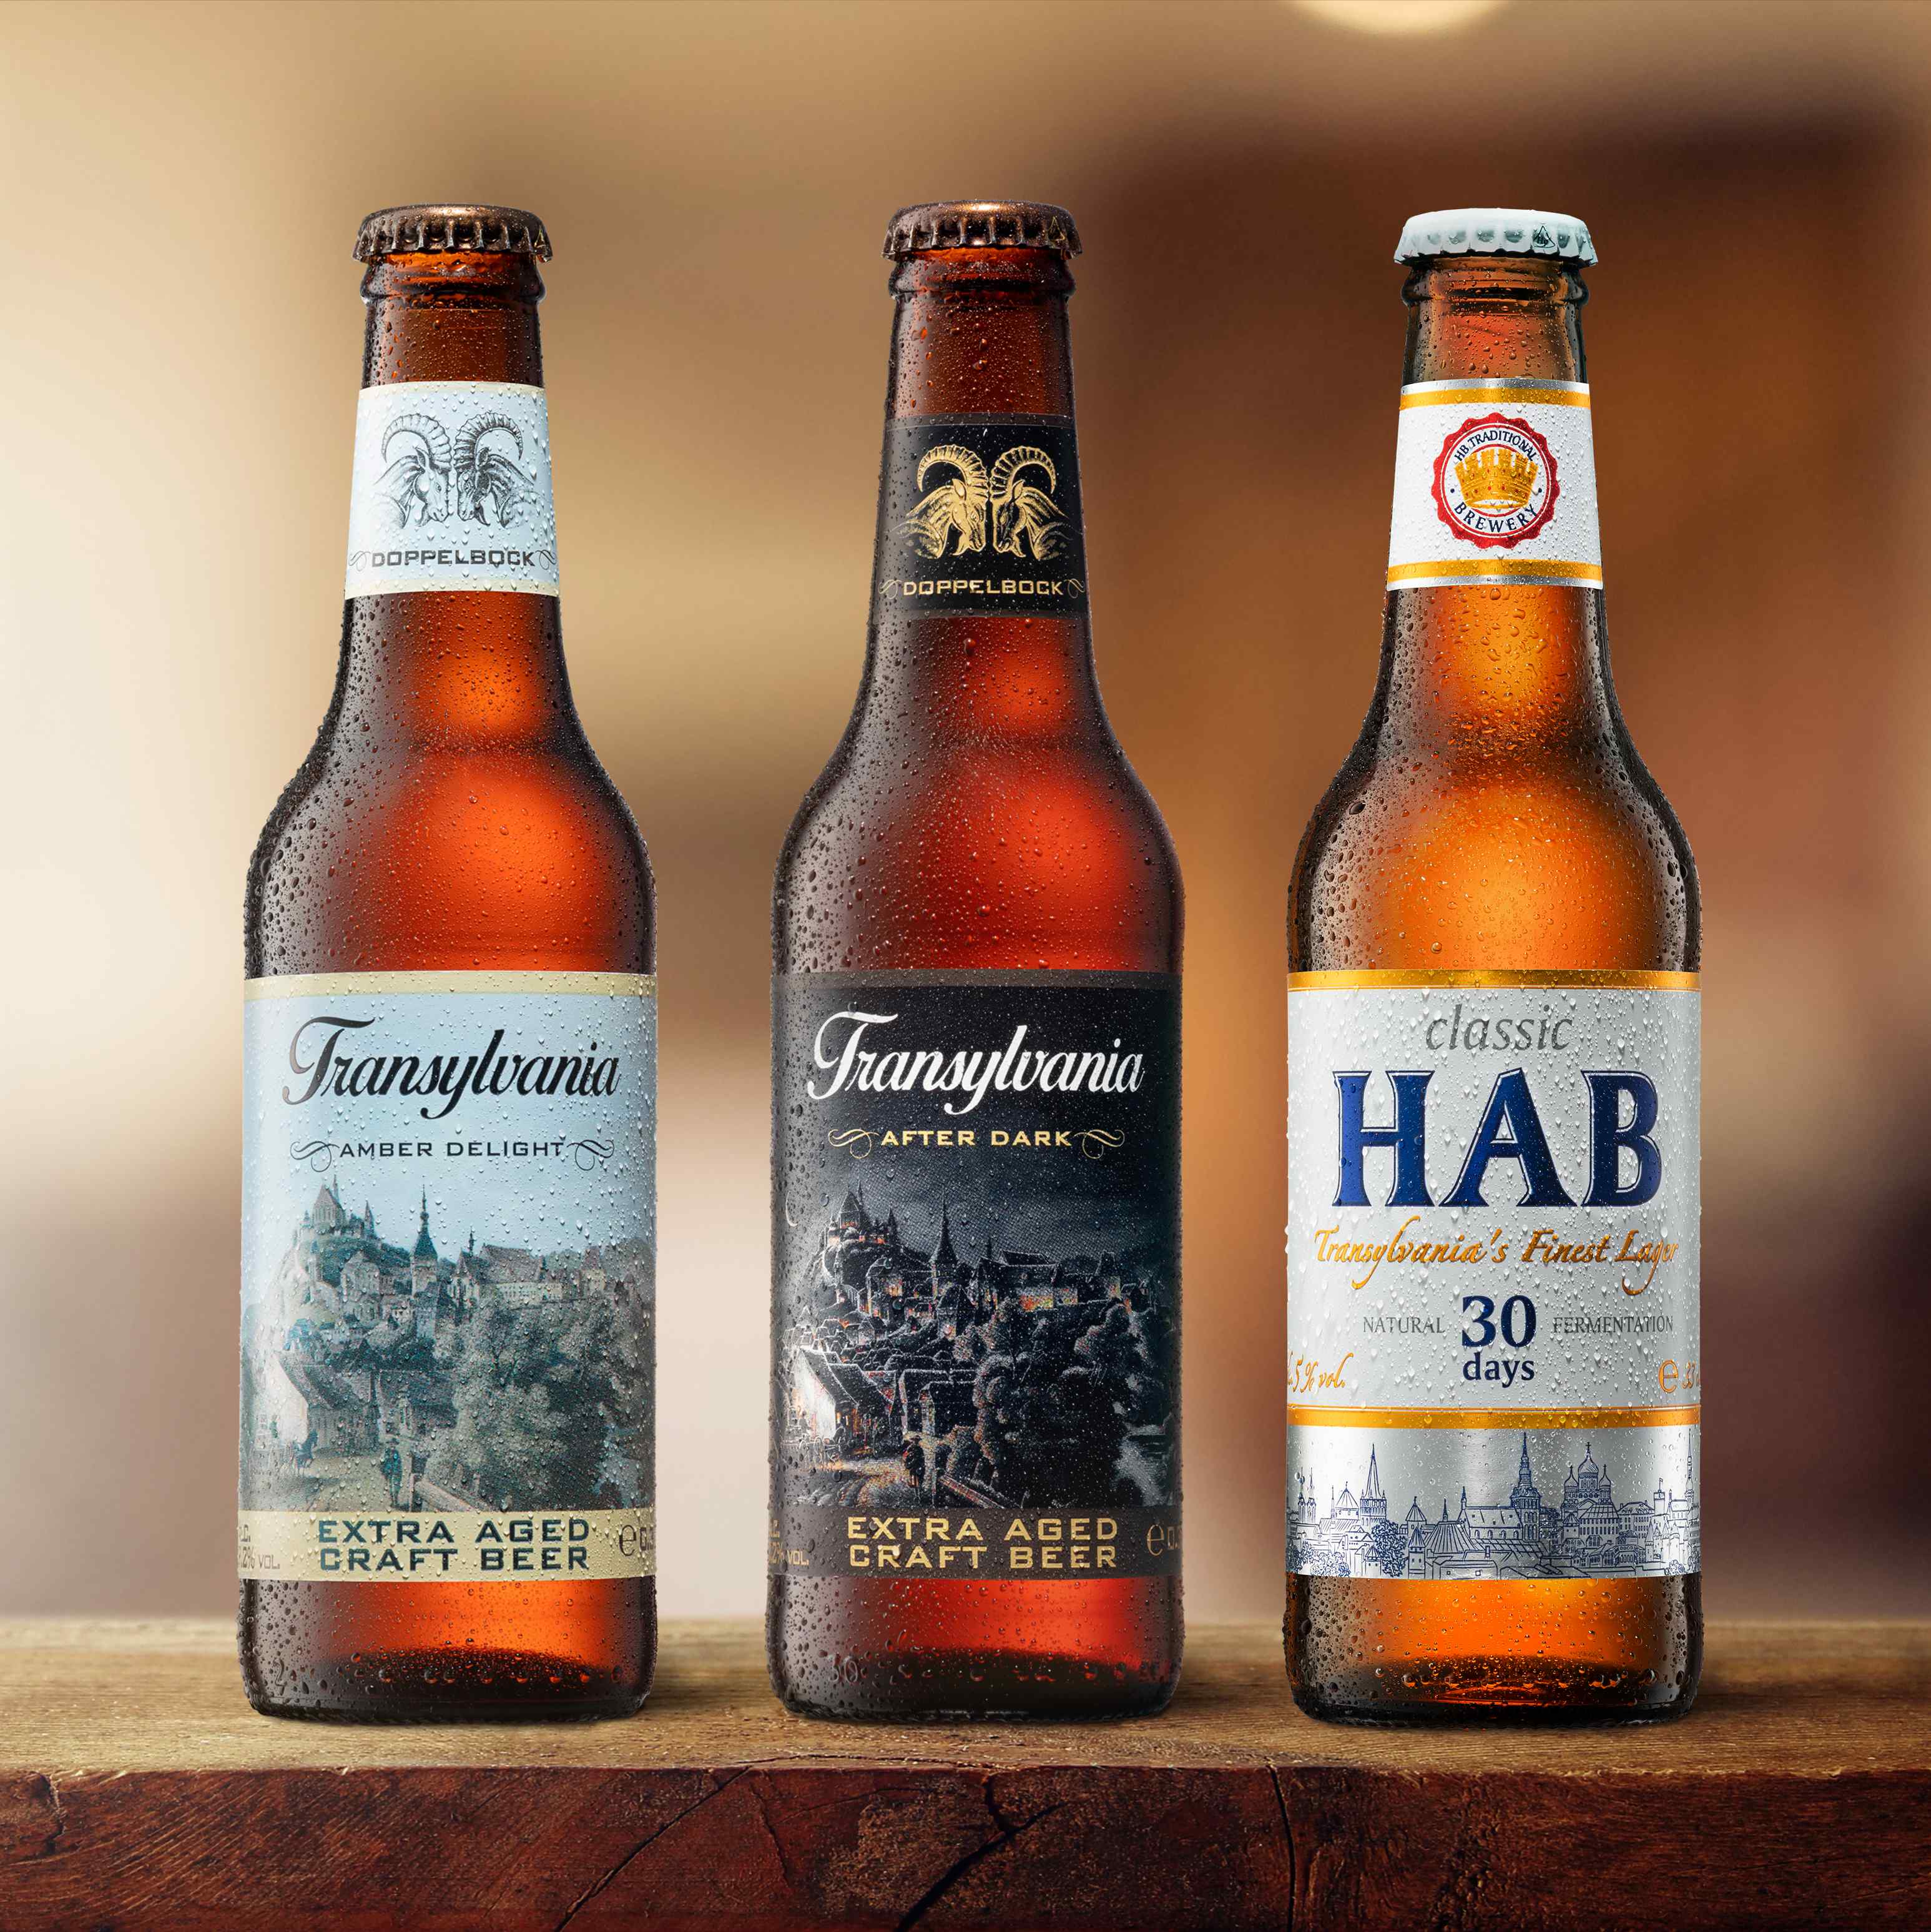 (P) Transylvania Beer, singura bere românească premiată la European Beer Challenge Londra 2020